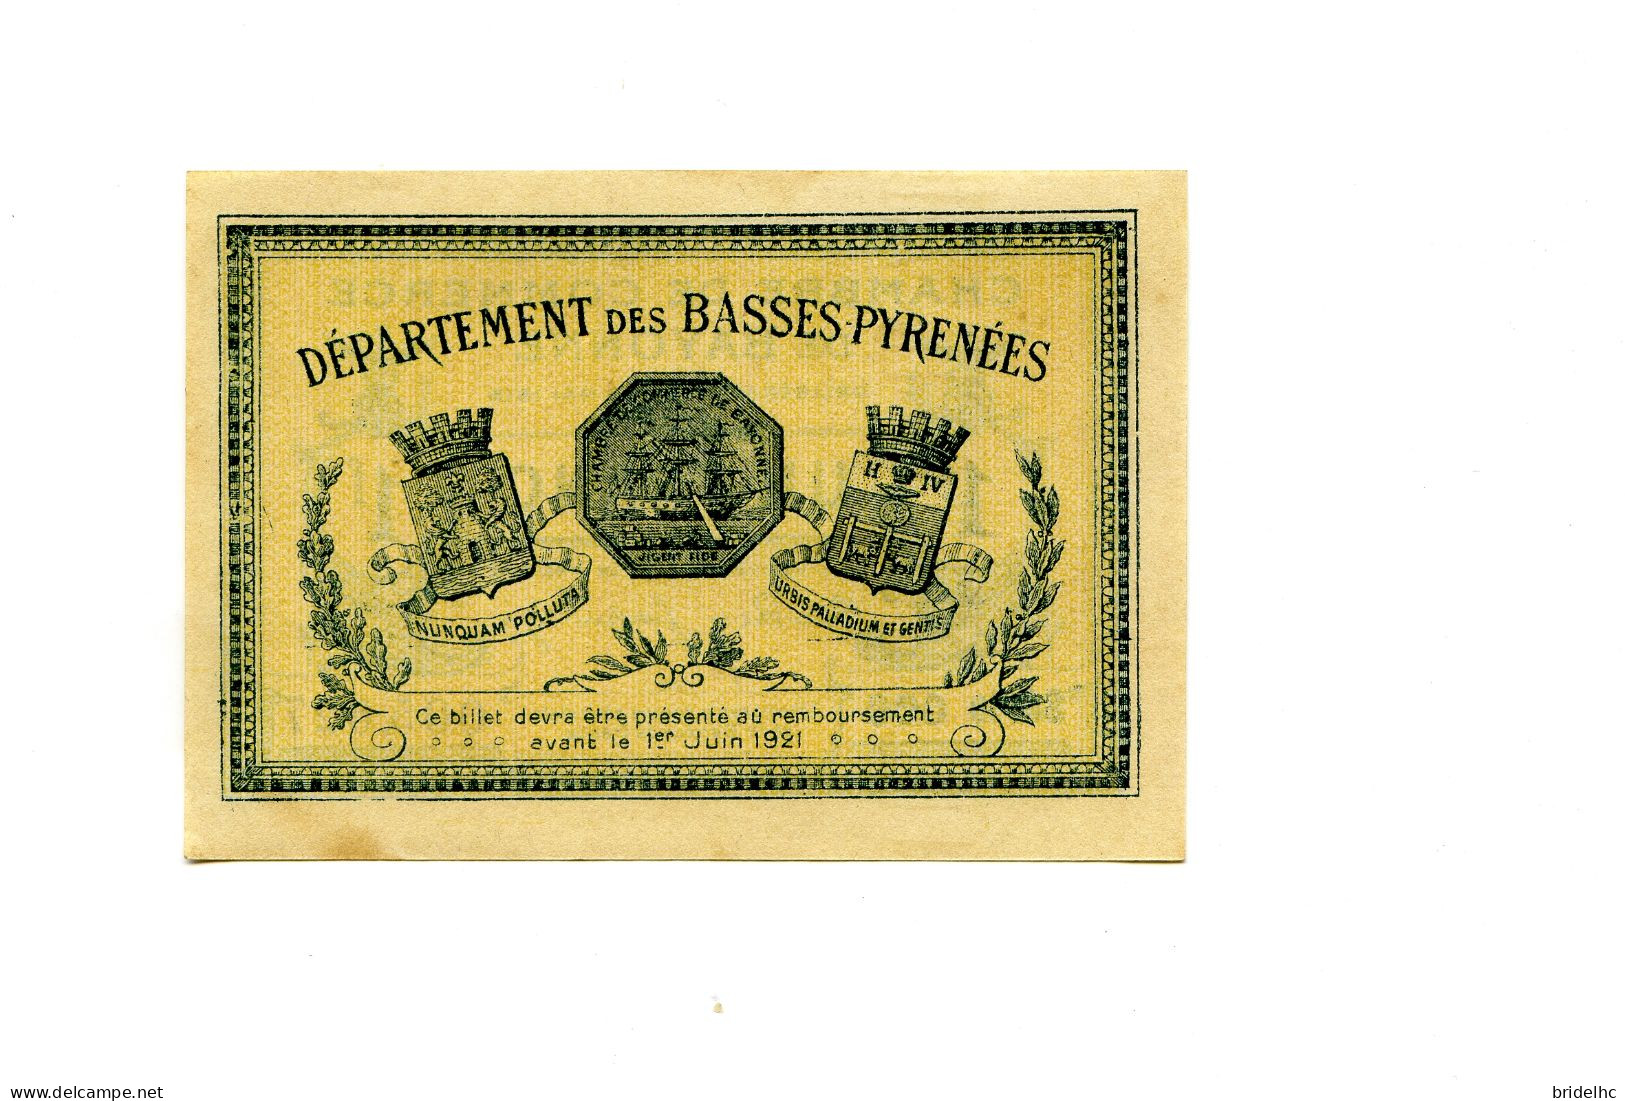 1 Franc  Chambre De Commerce De Bayonne 1916 - Bonos